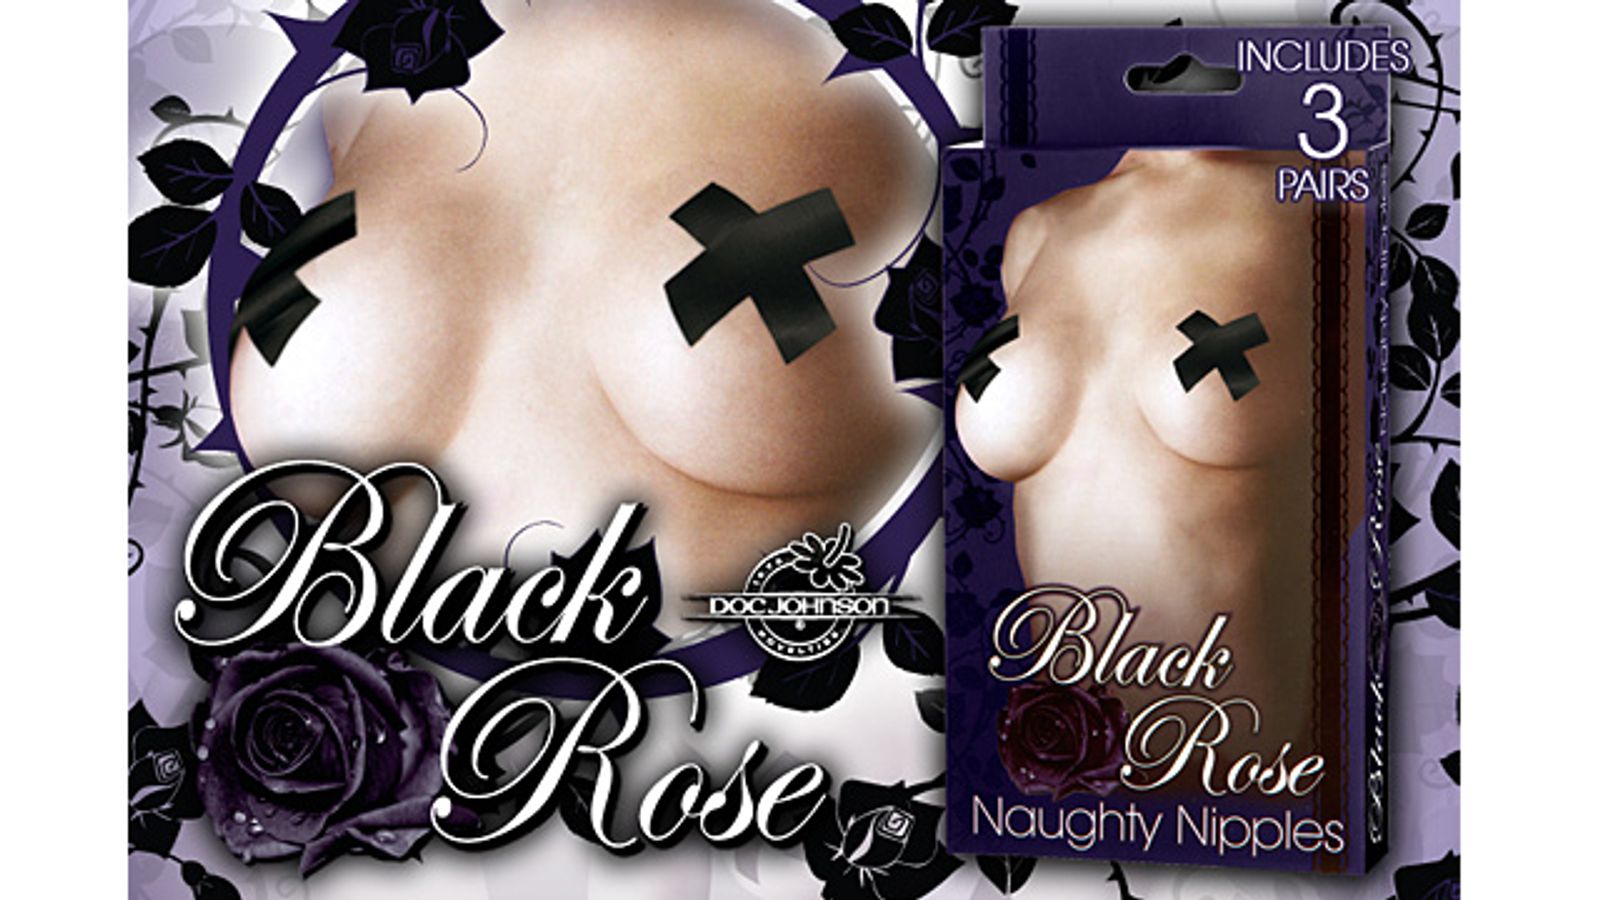 Doc Johnson Expands Popular Black Rose Collection